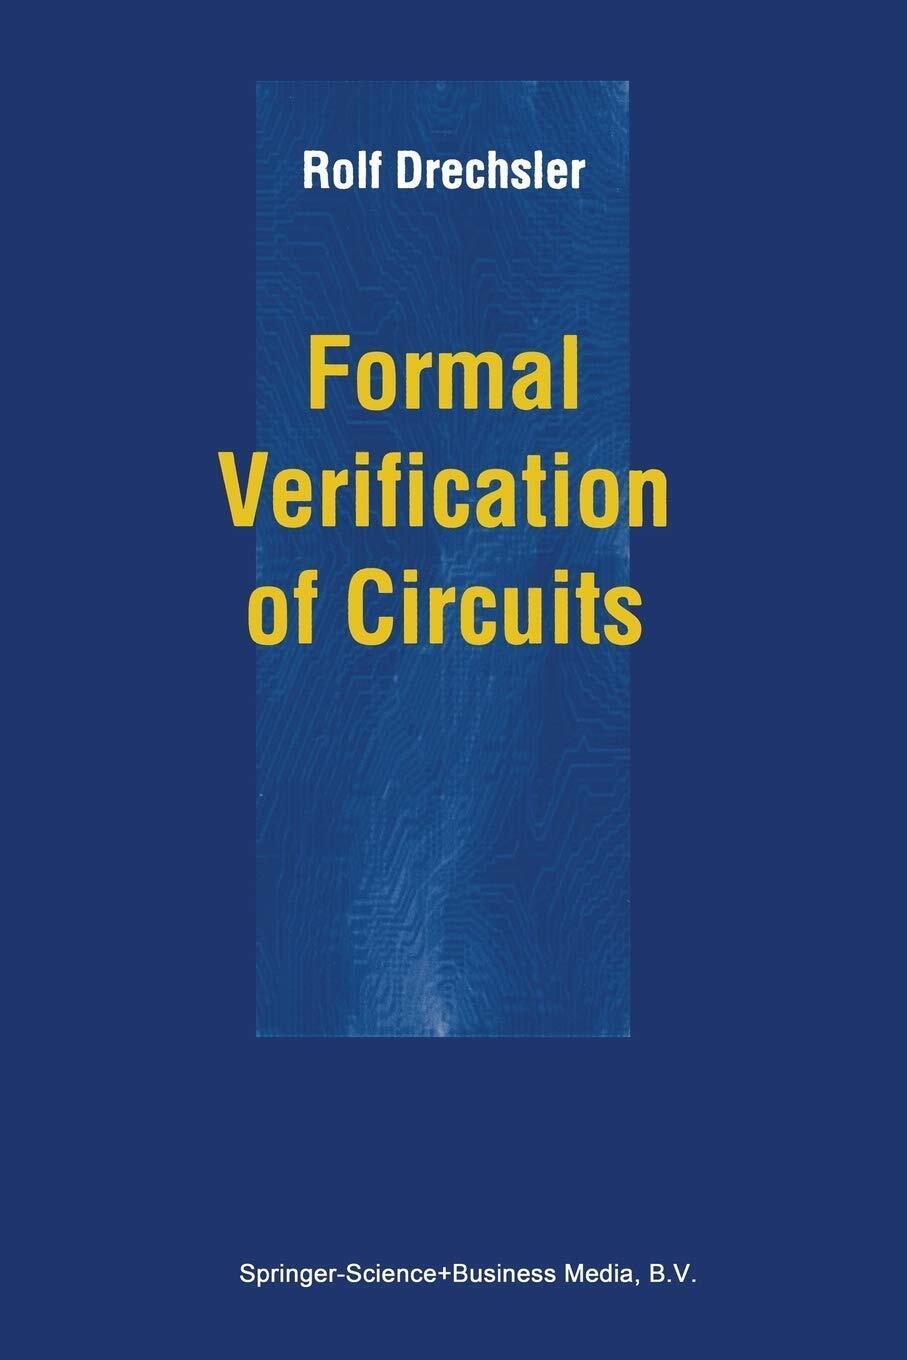 Formal Verification of Circuits - Rolf Drechsler - Springer, 2010 libro usato